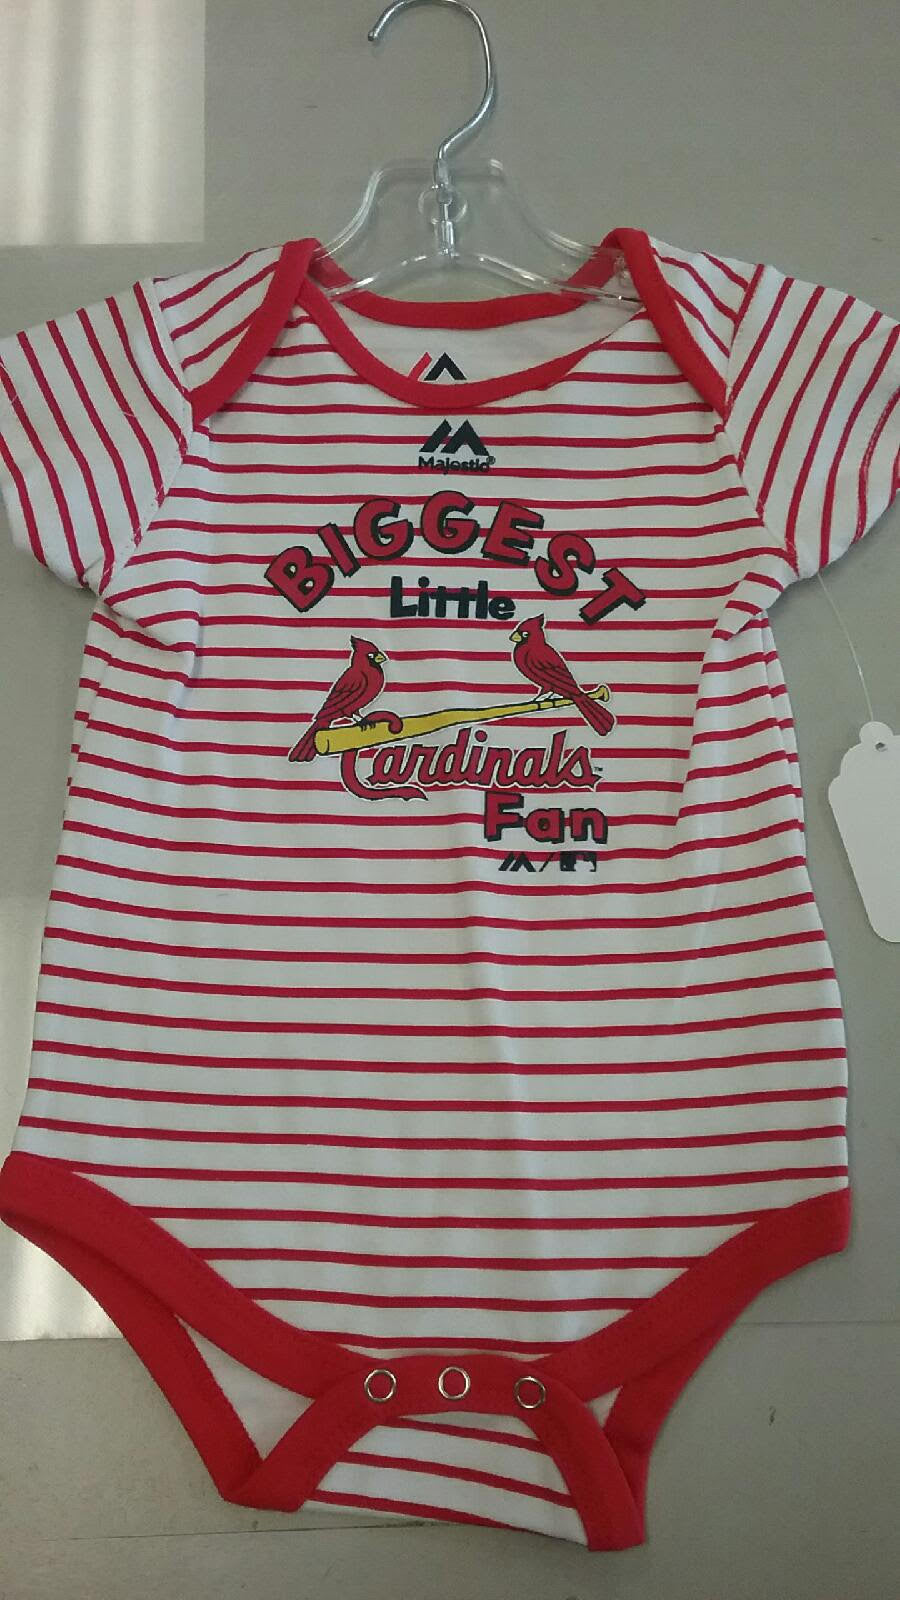 St. Louis Cardinals Baby Apparel, Baby Cardinals Clothing